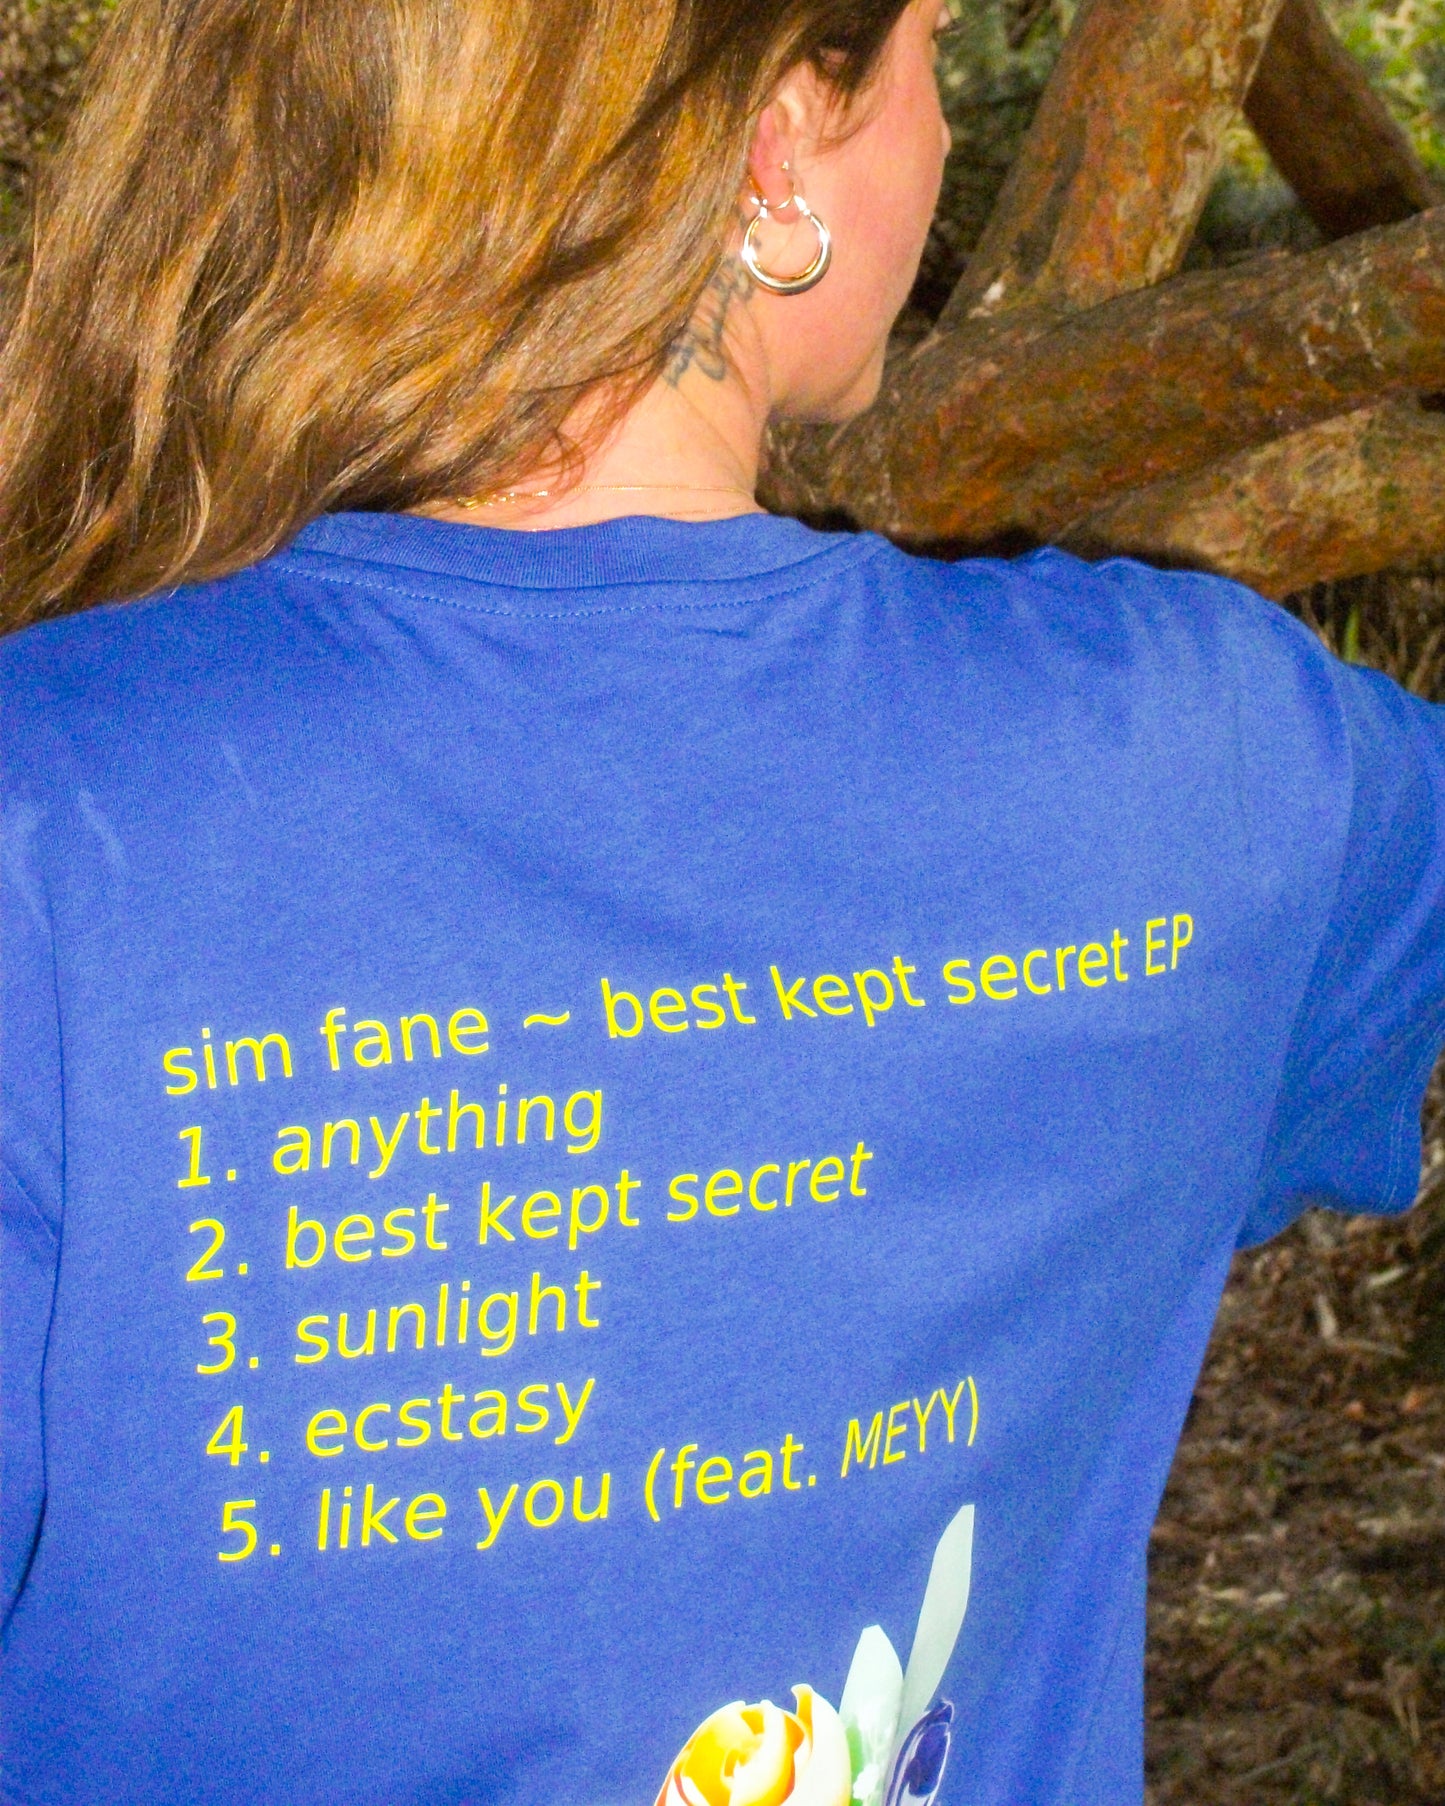 T-shirt — 'best kept secret' (EP)